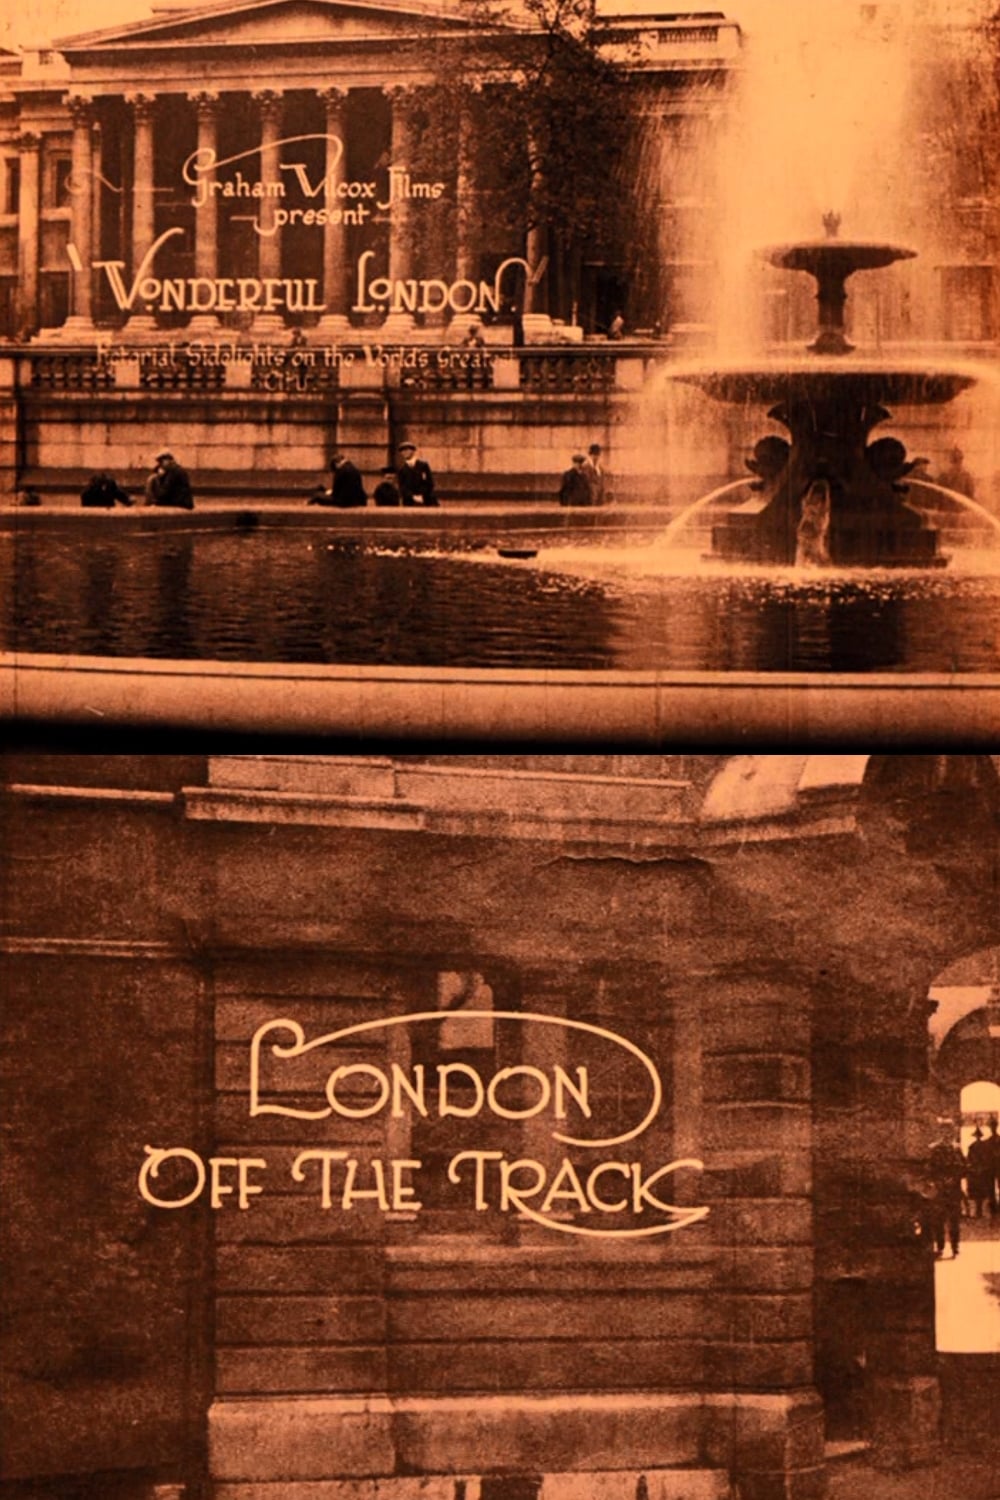 Wonderful London: London Off the Track